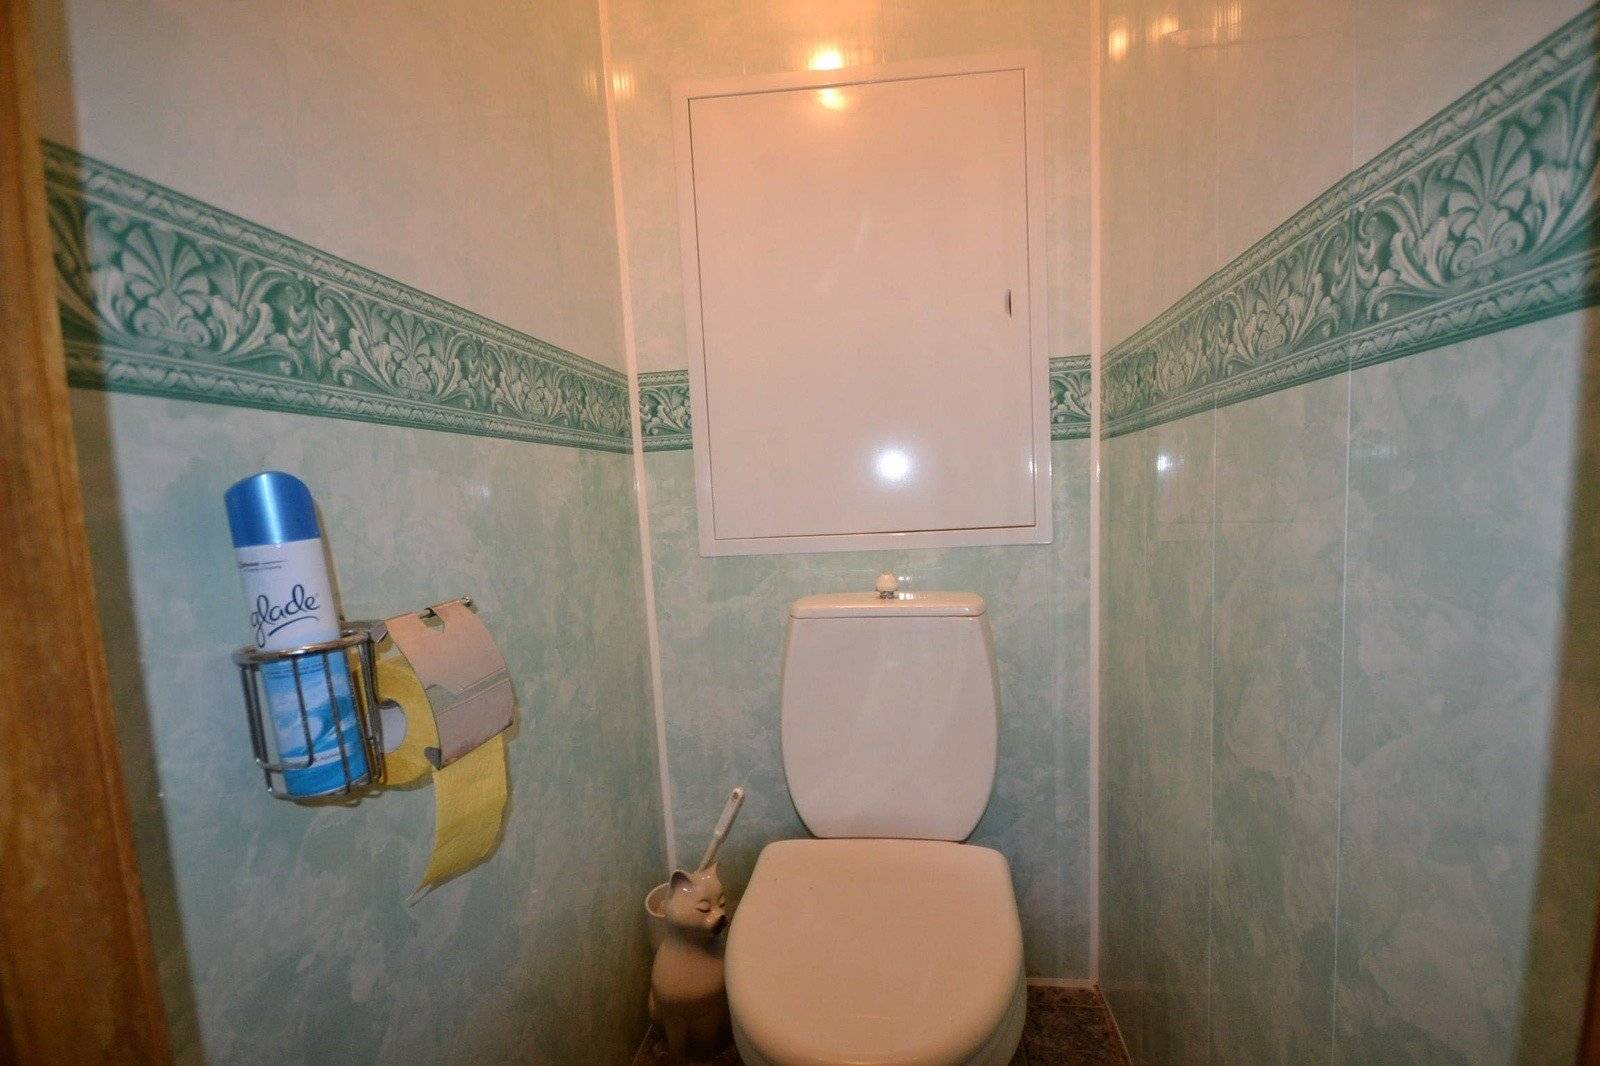 2021 ᐈ ???? (+79 фото) отделка ванной комнаты пластиковыми панелями 79 фото